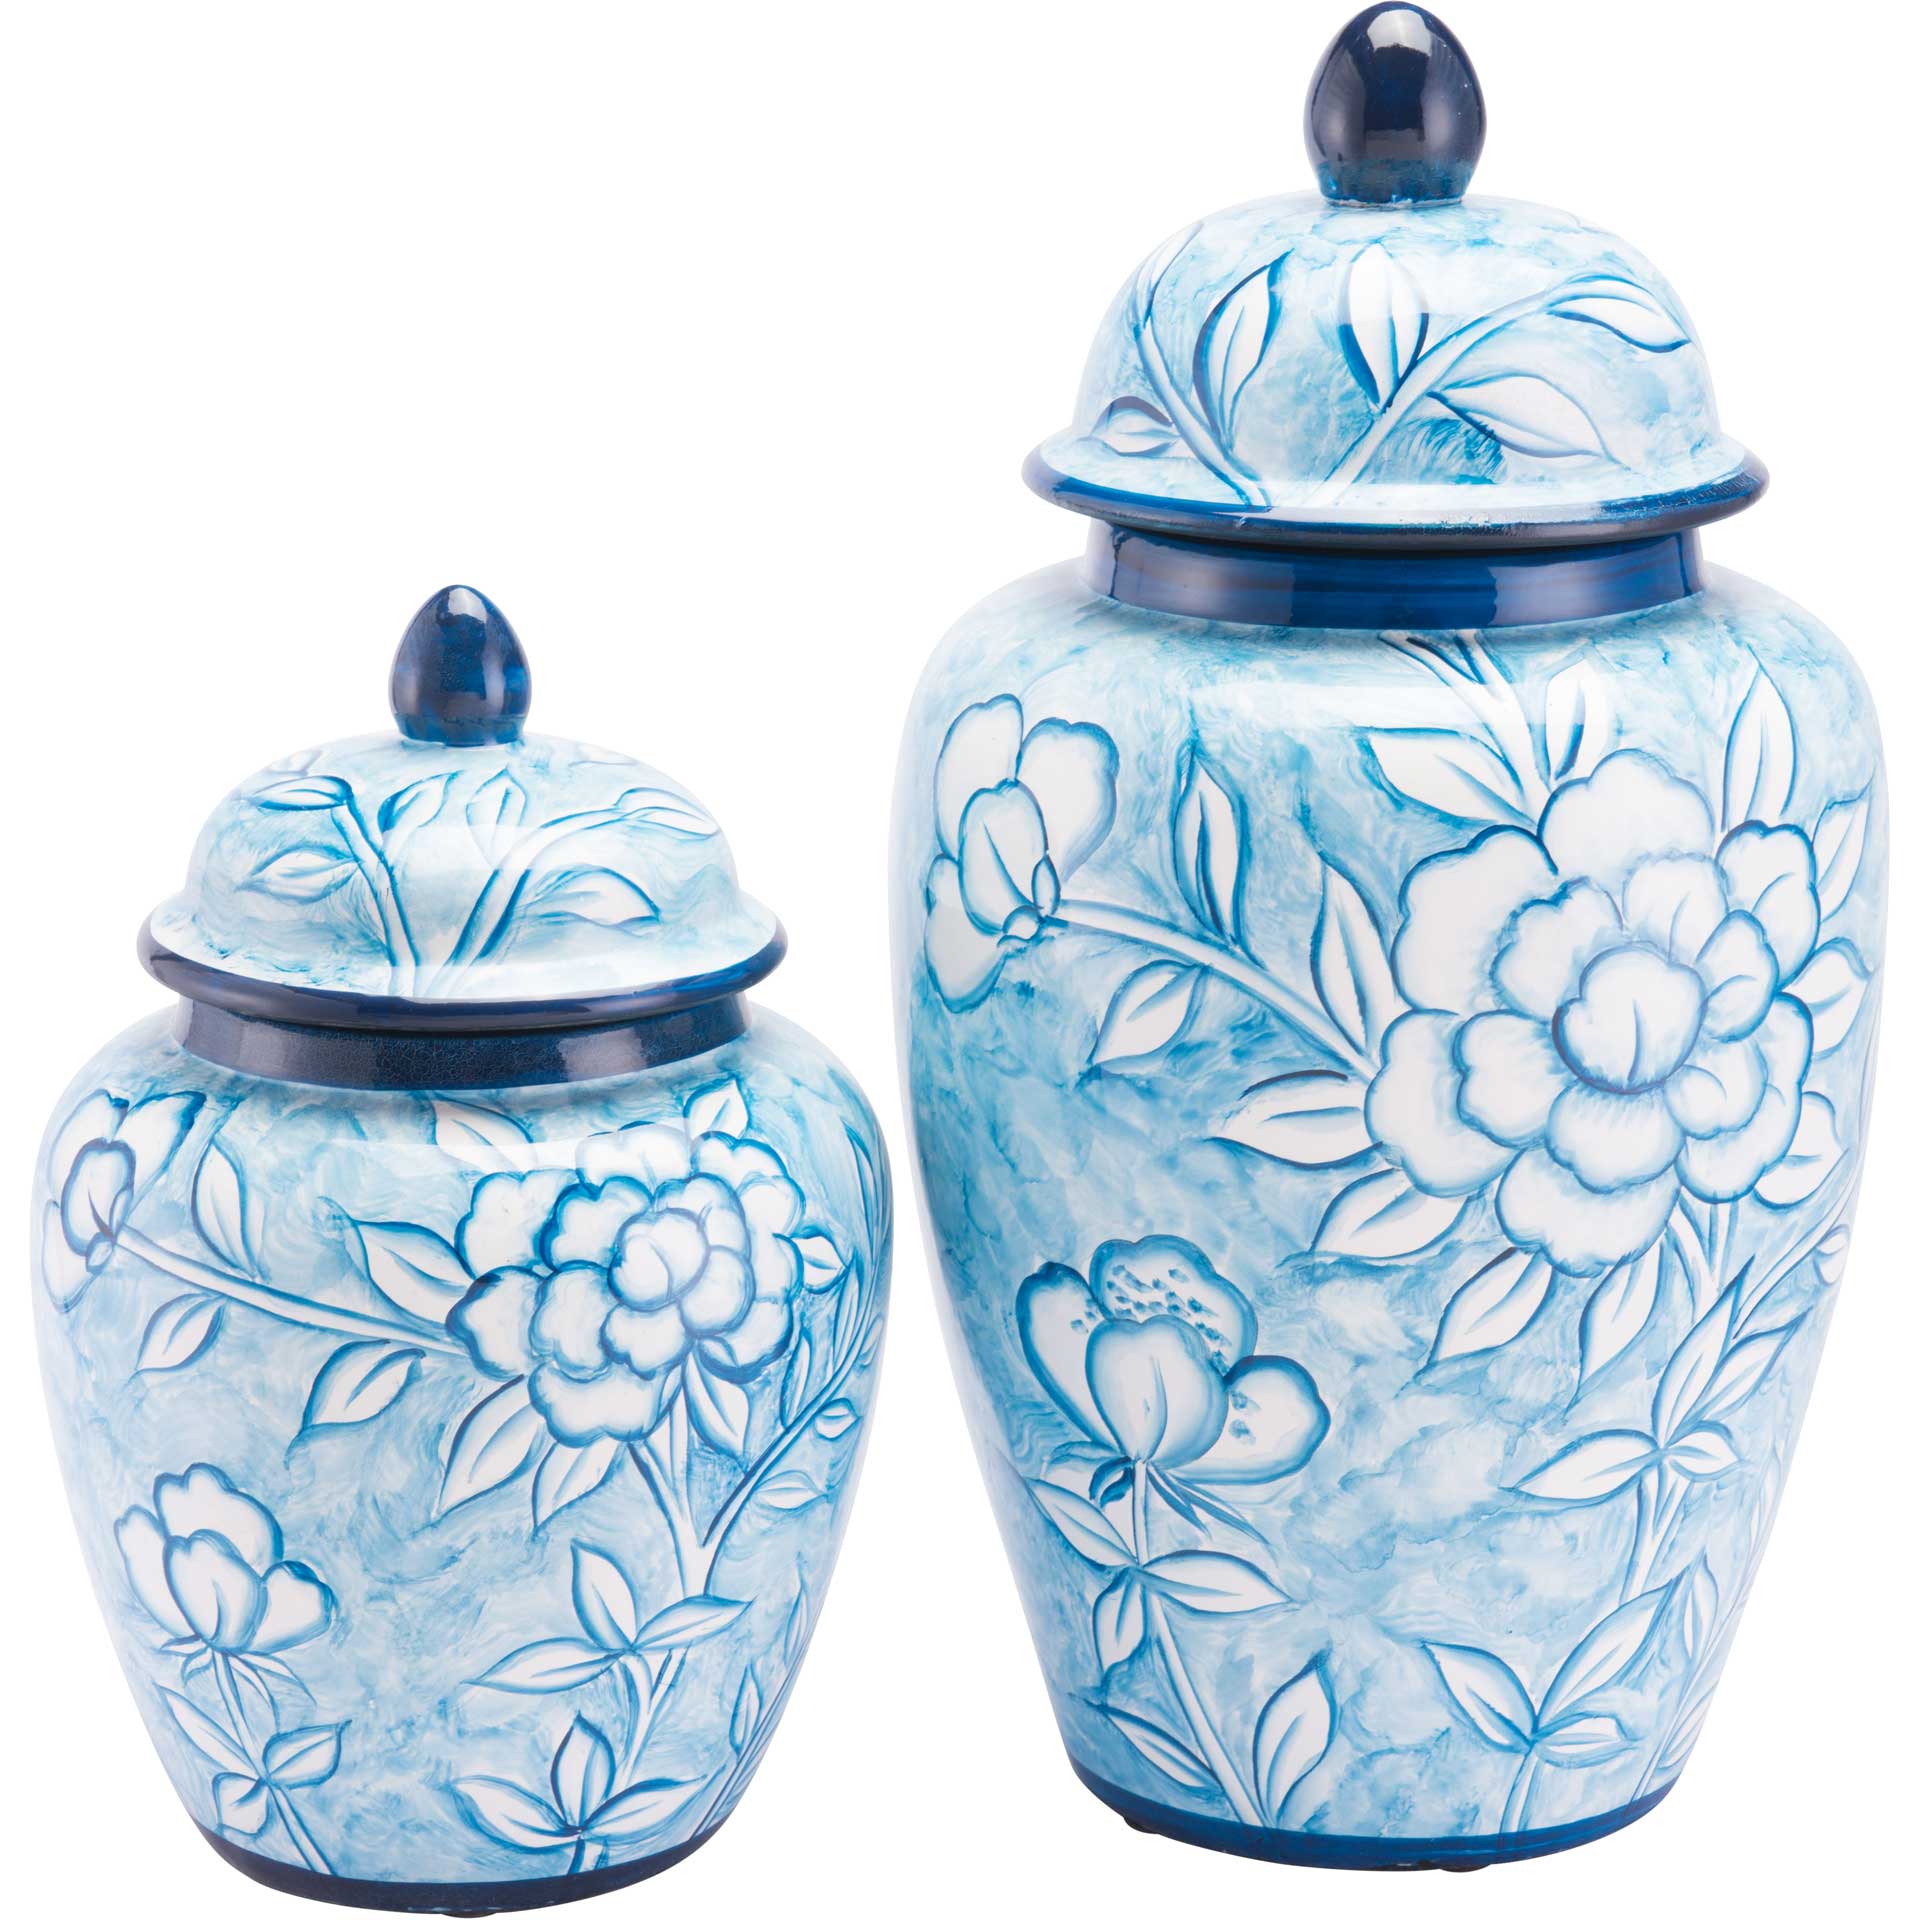 Flower Temple Jar Blue/White